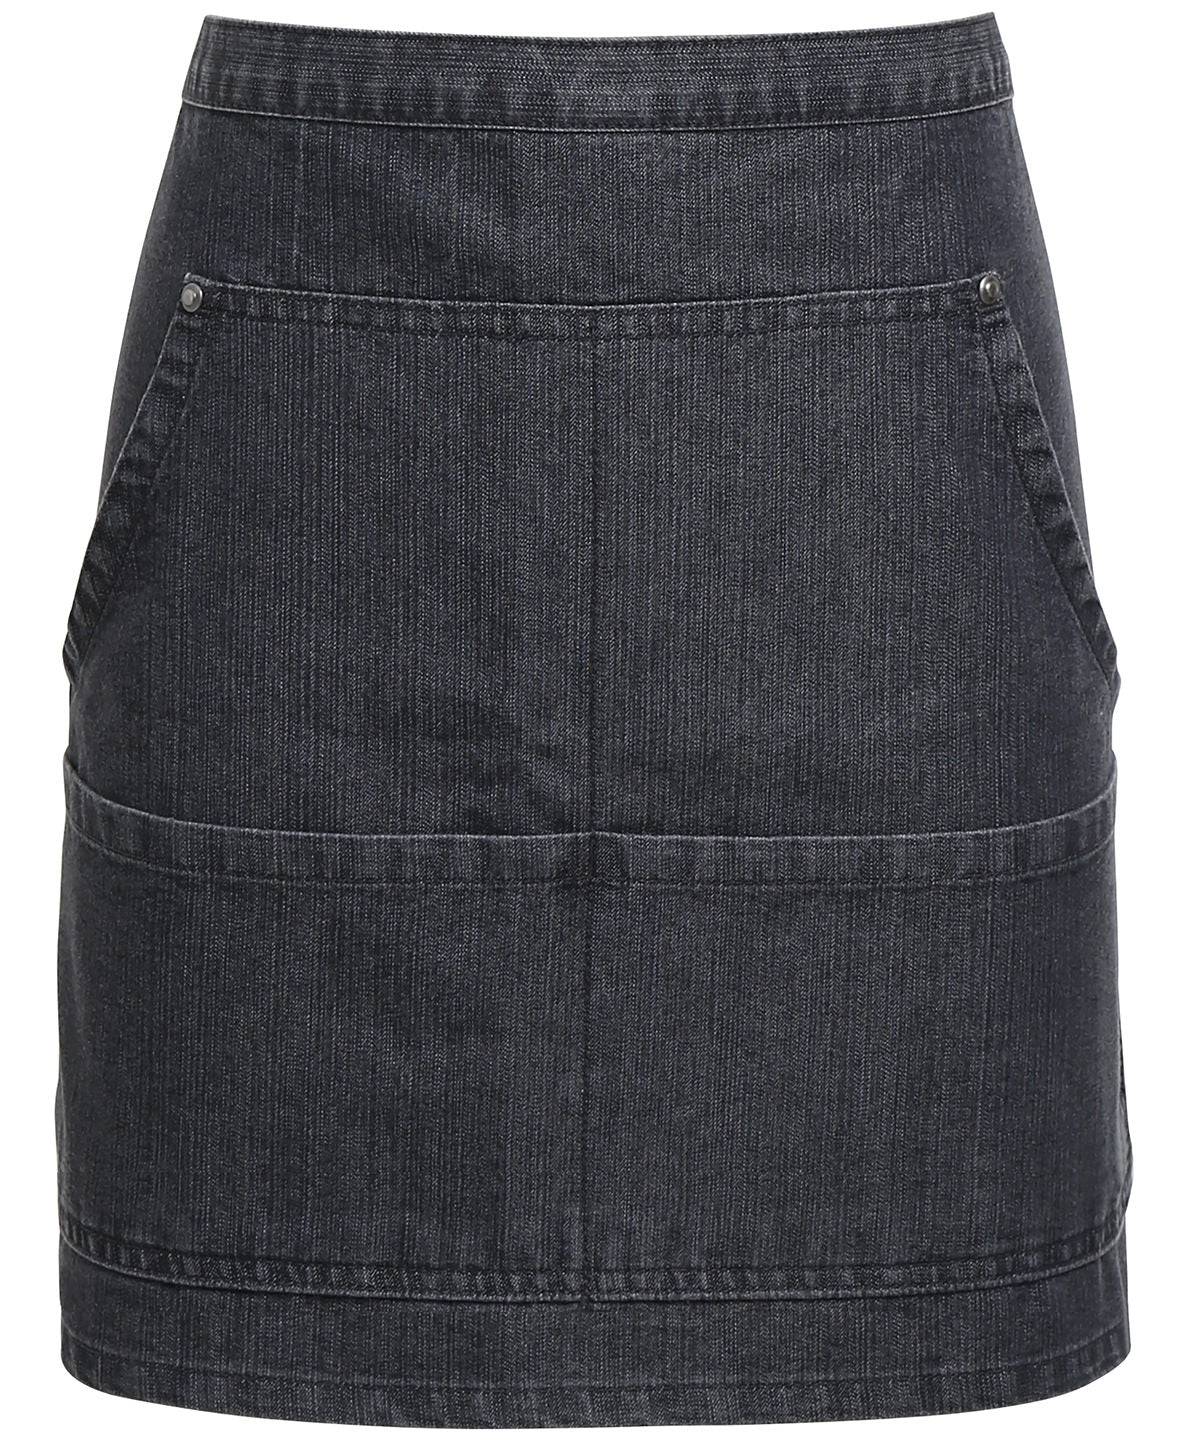 Black Denim - Jeans stitch denim waist apron